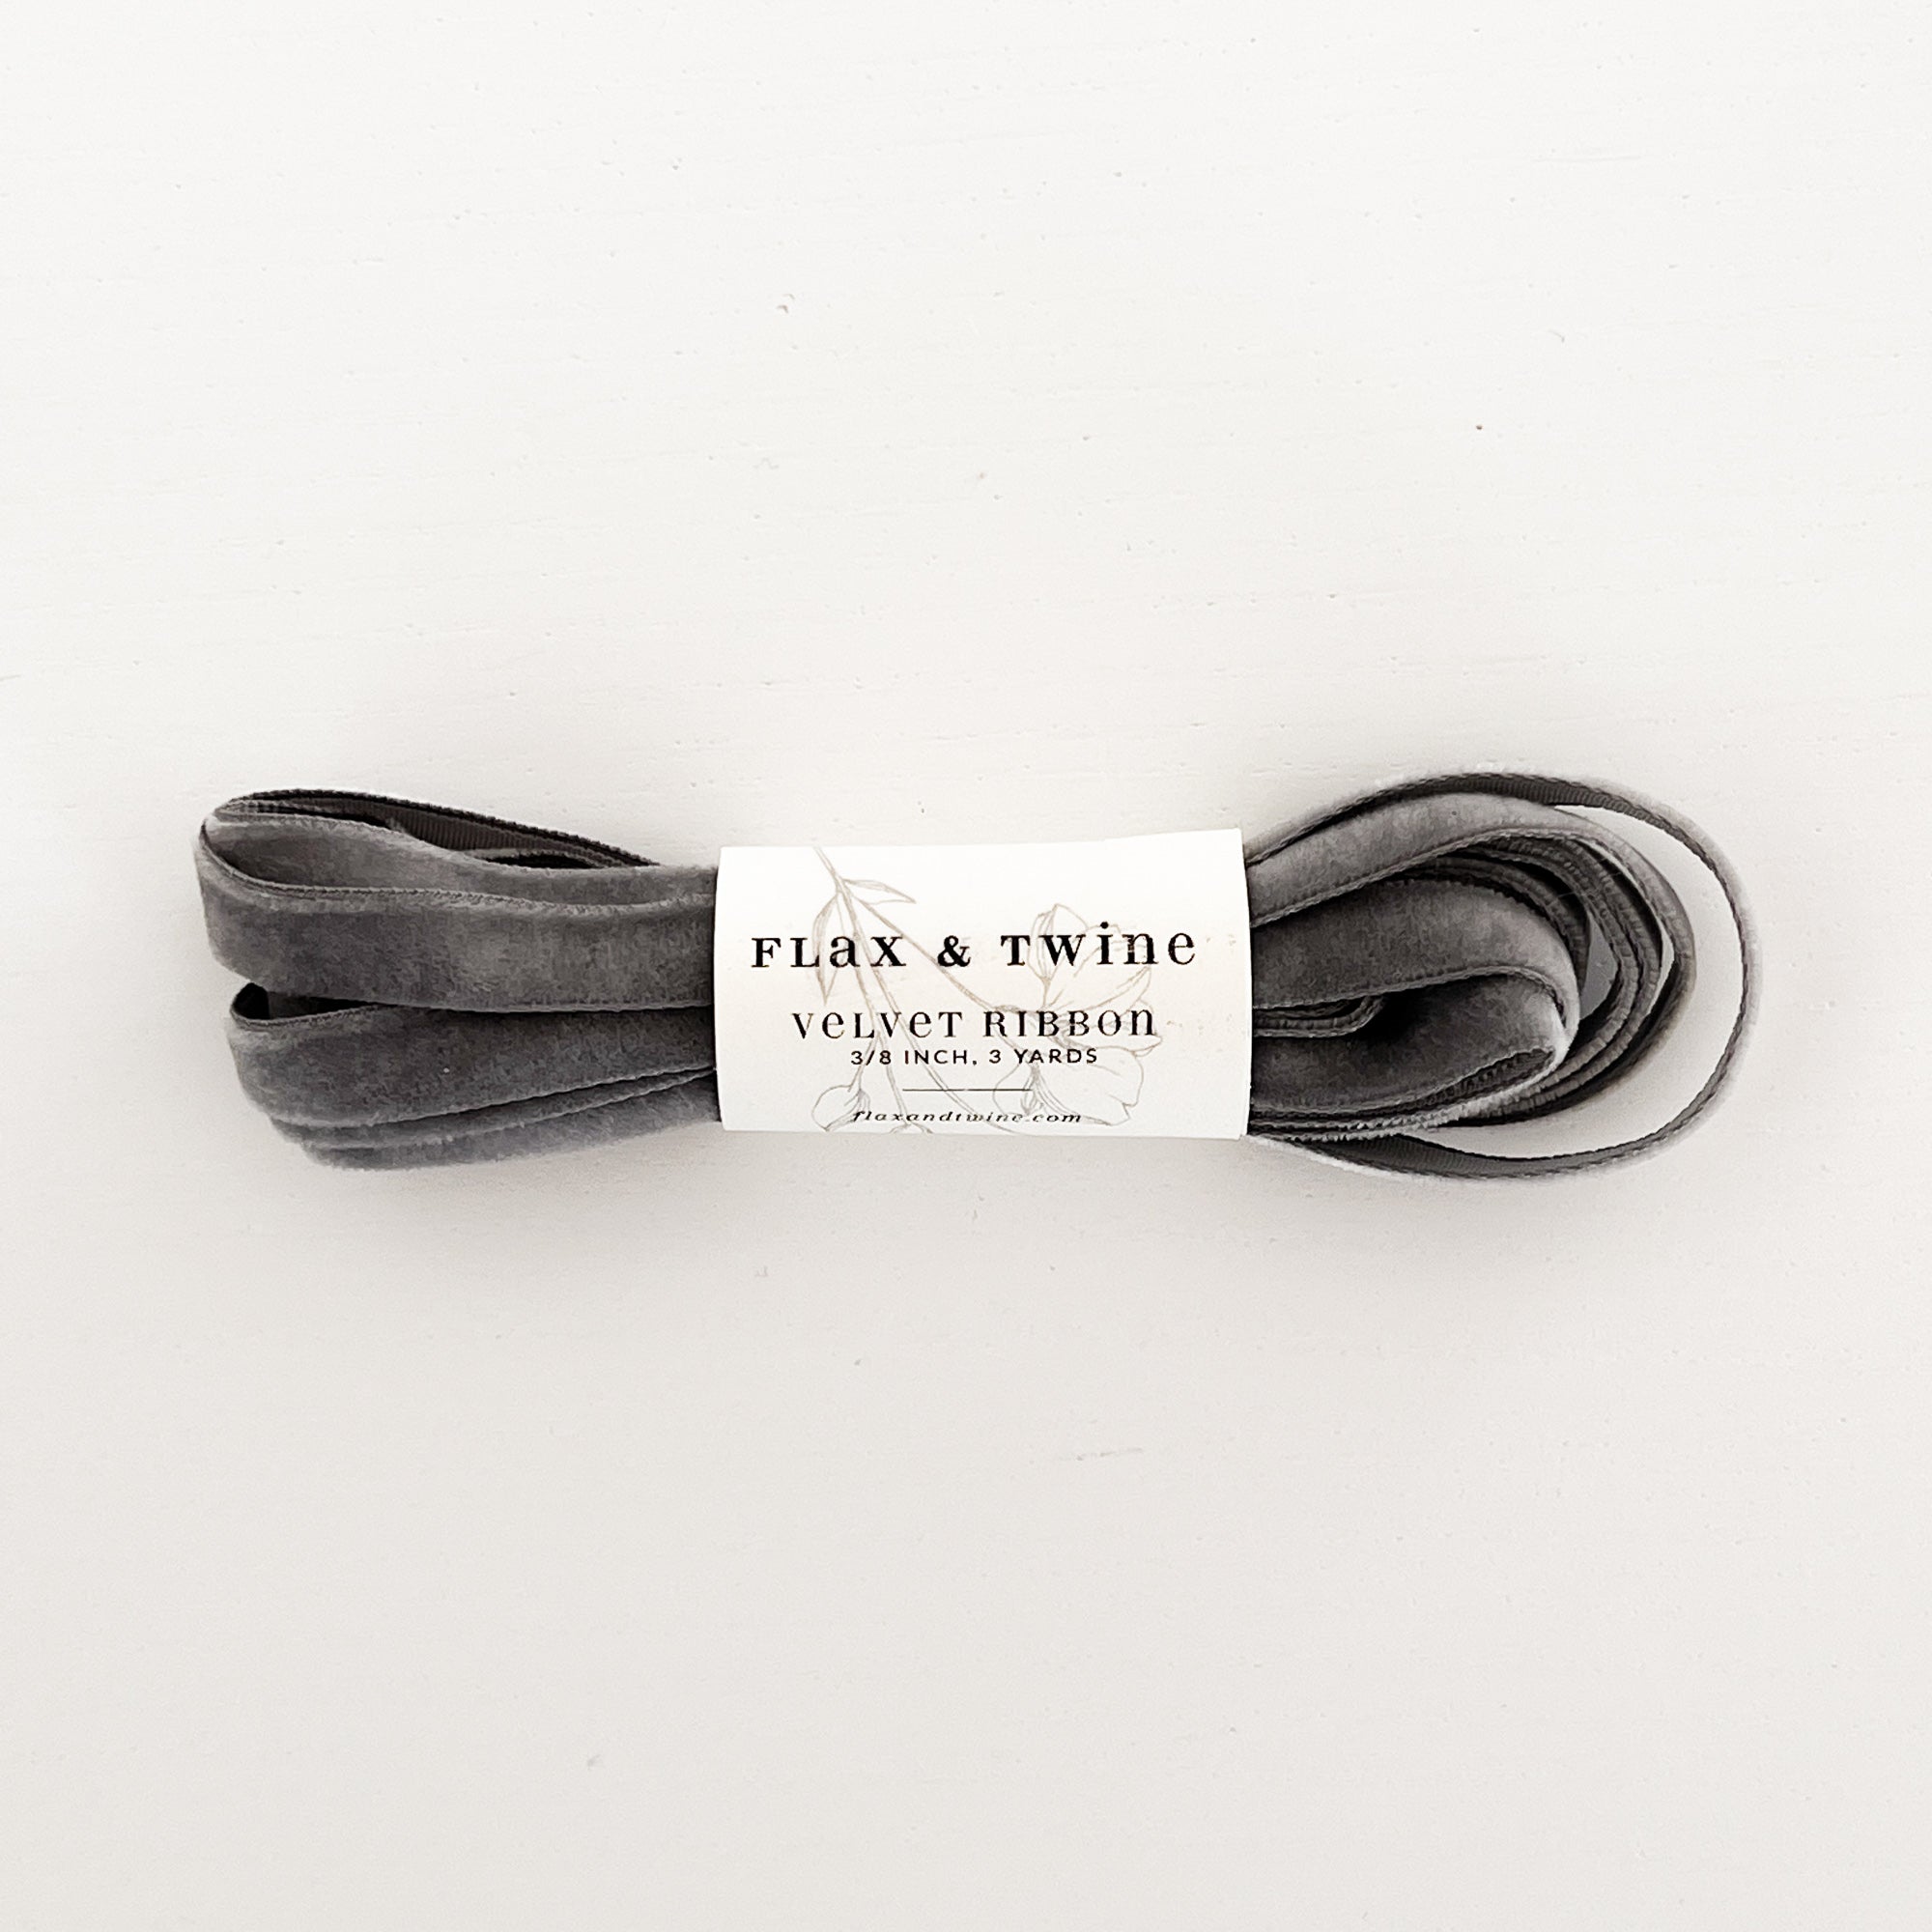 Flax & Twine 3/8" Velvet Ribbon